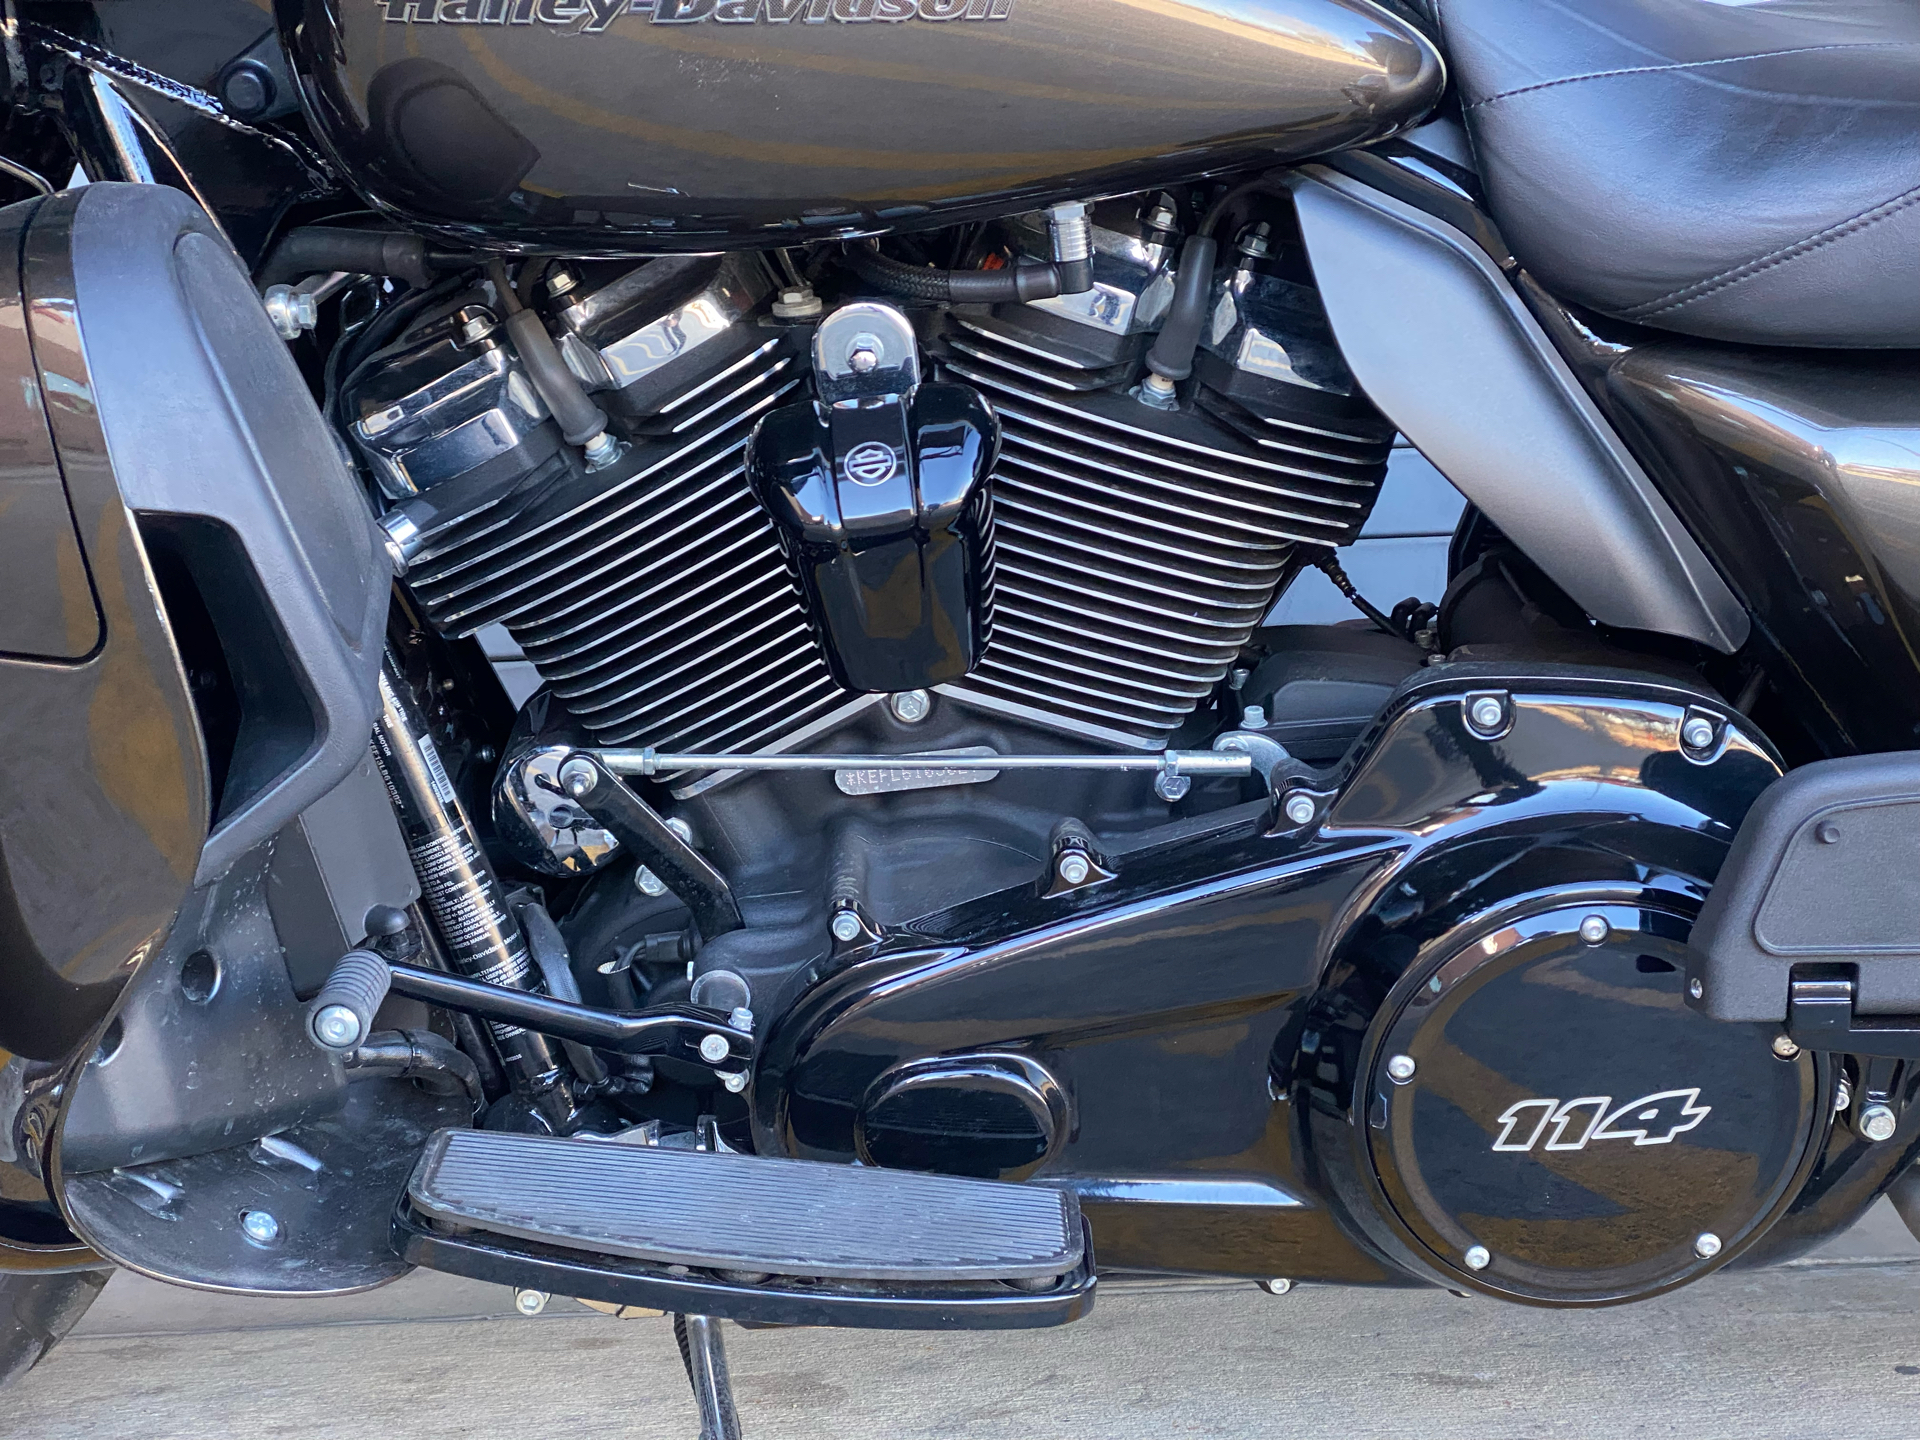 2020 Harley-Davidson Ultra Limited in Carrollton, Texas - Photo 17